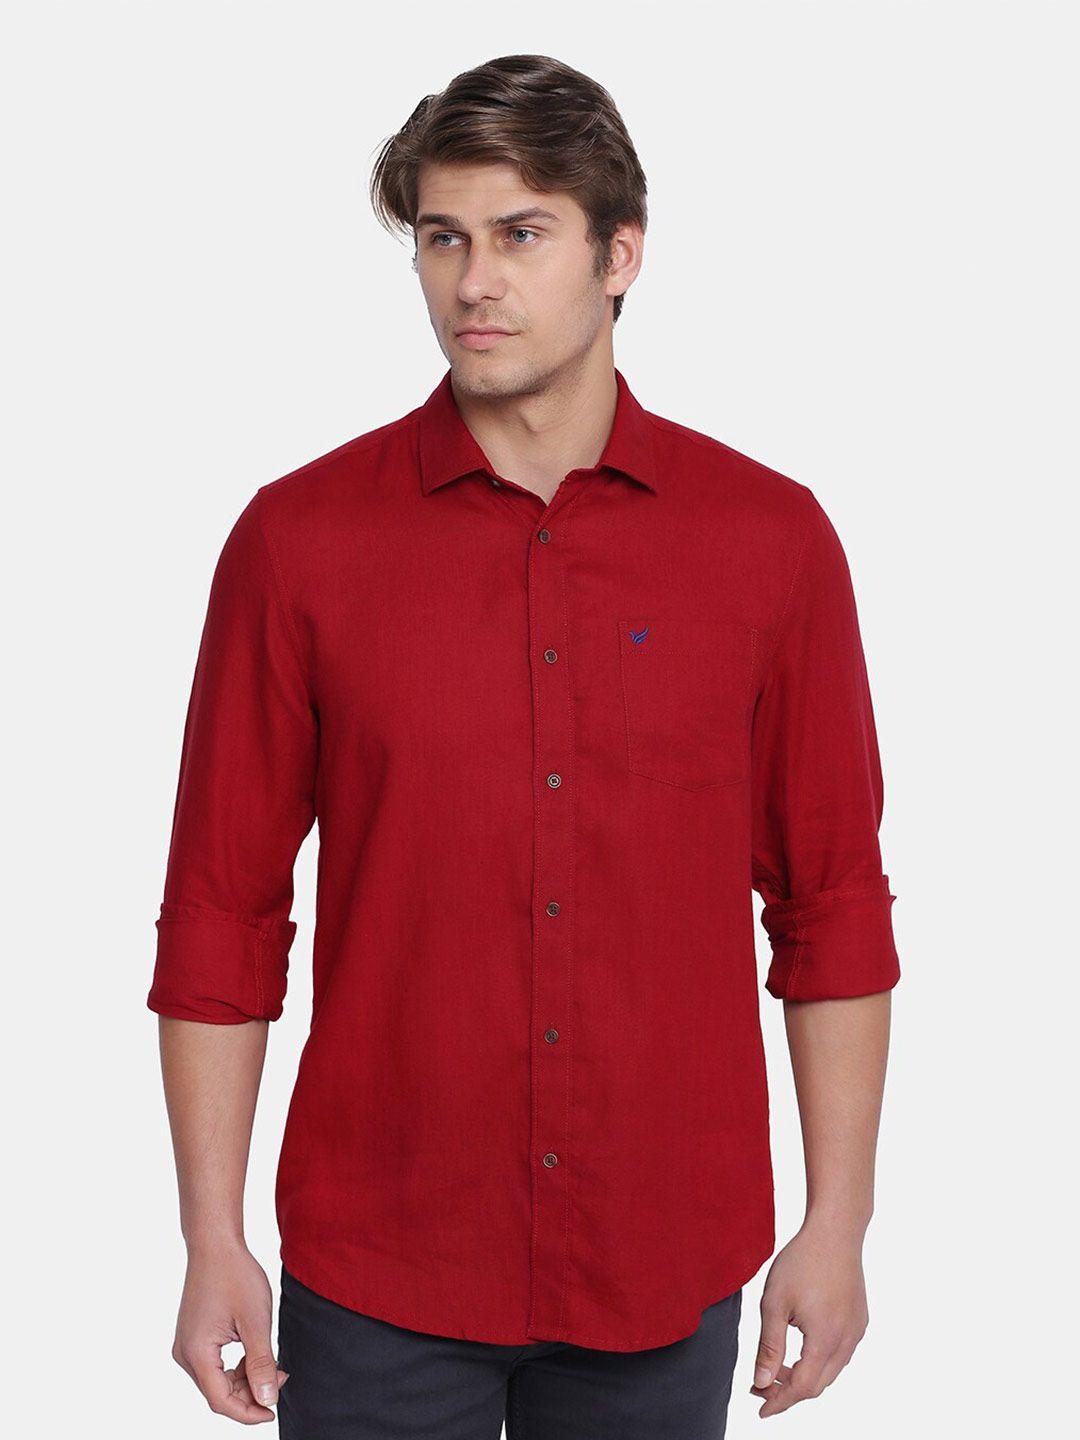 blackberrys-men-red-slim-fit-casual-shirt